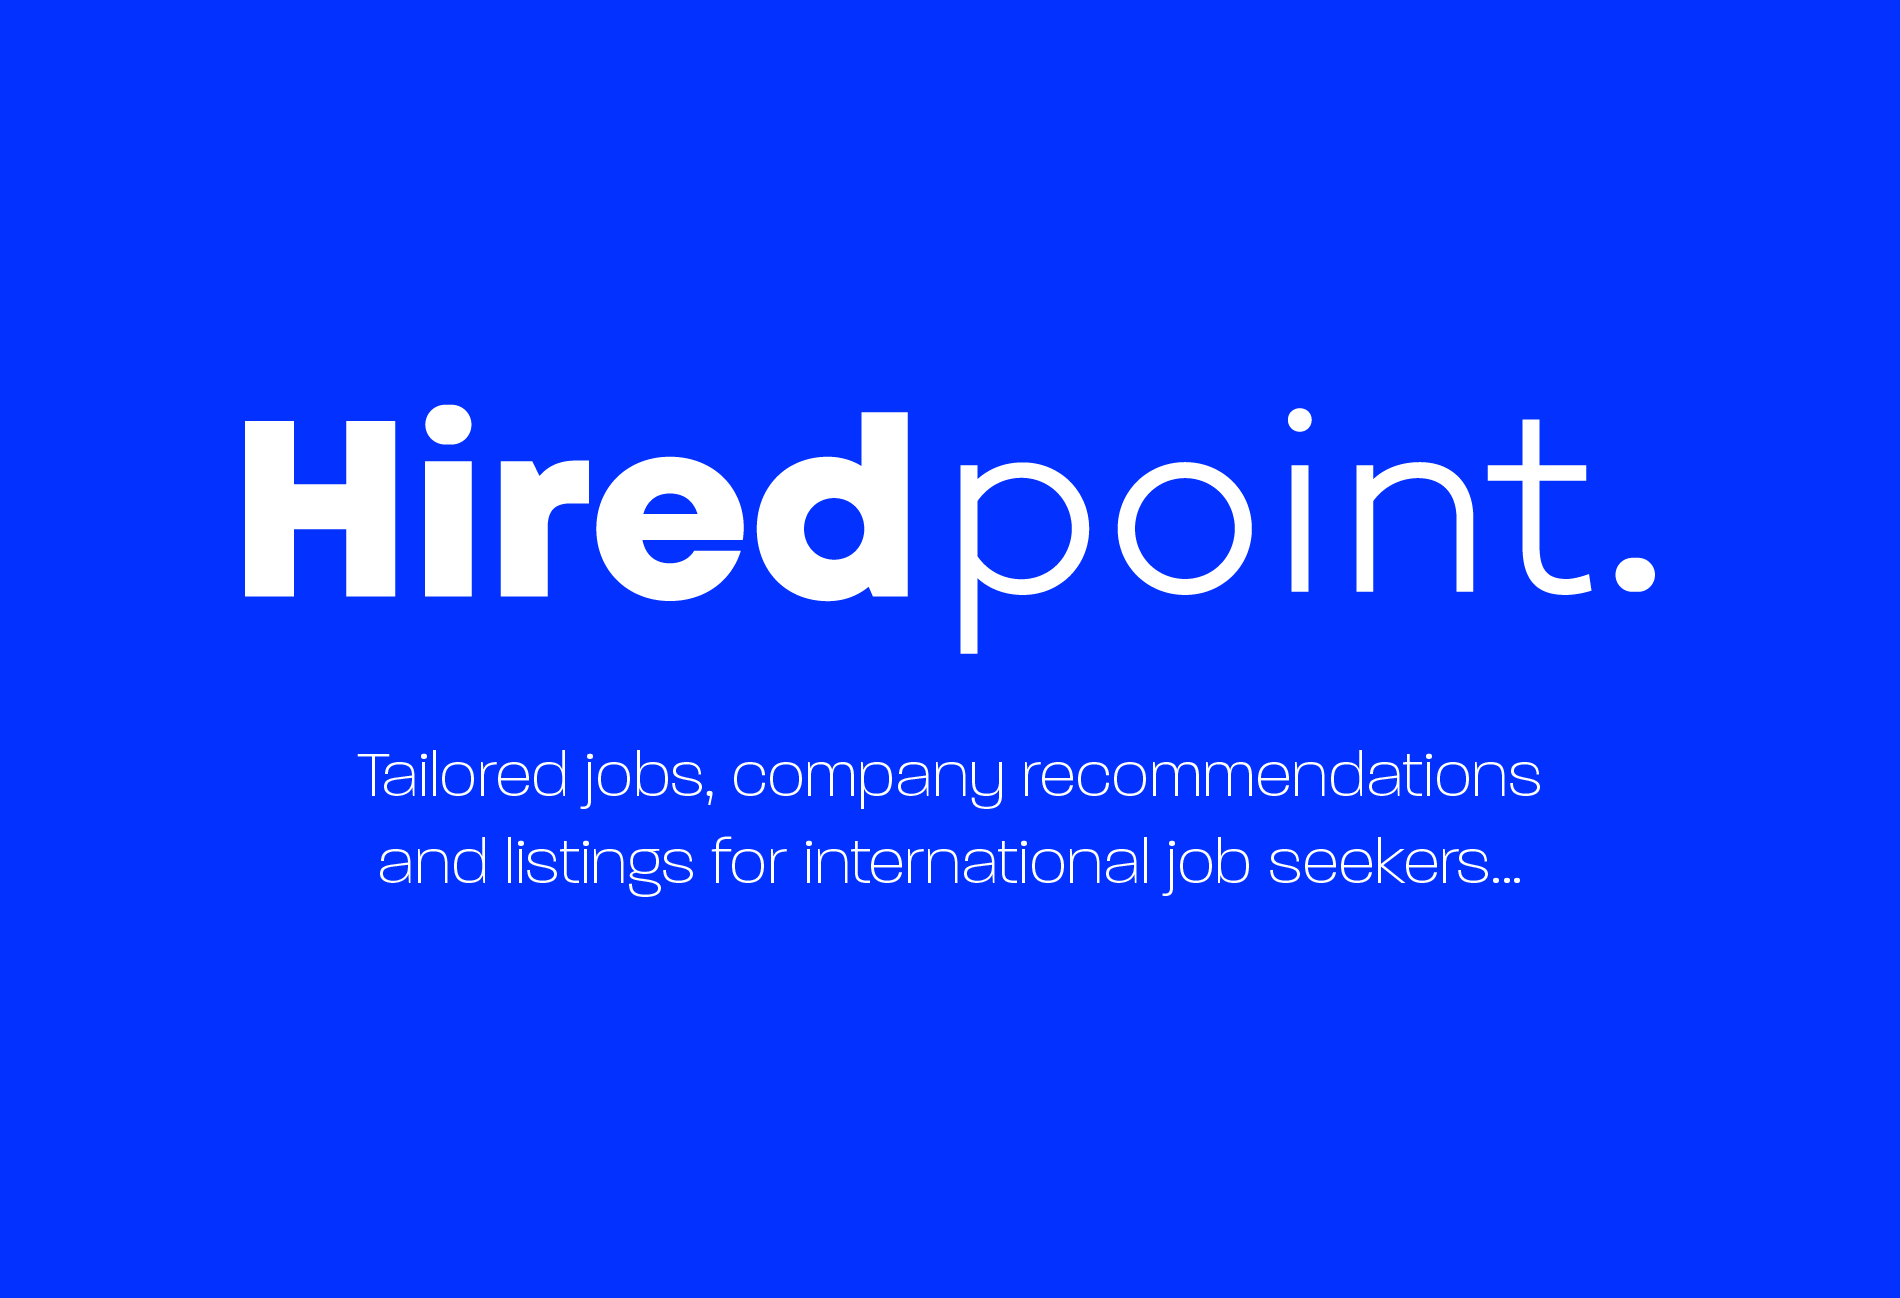 HiredPoint Logo and Strapline